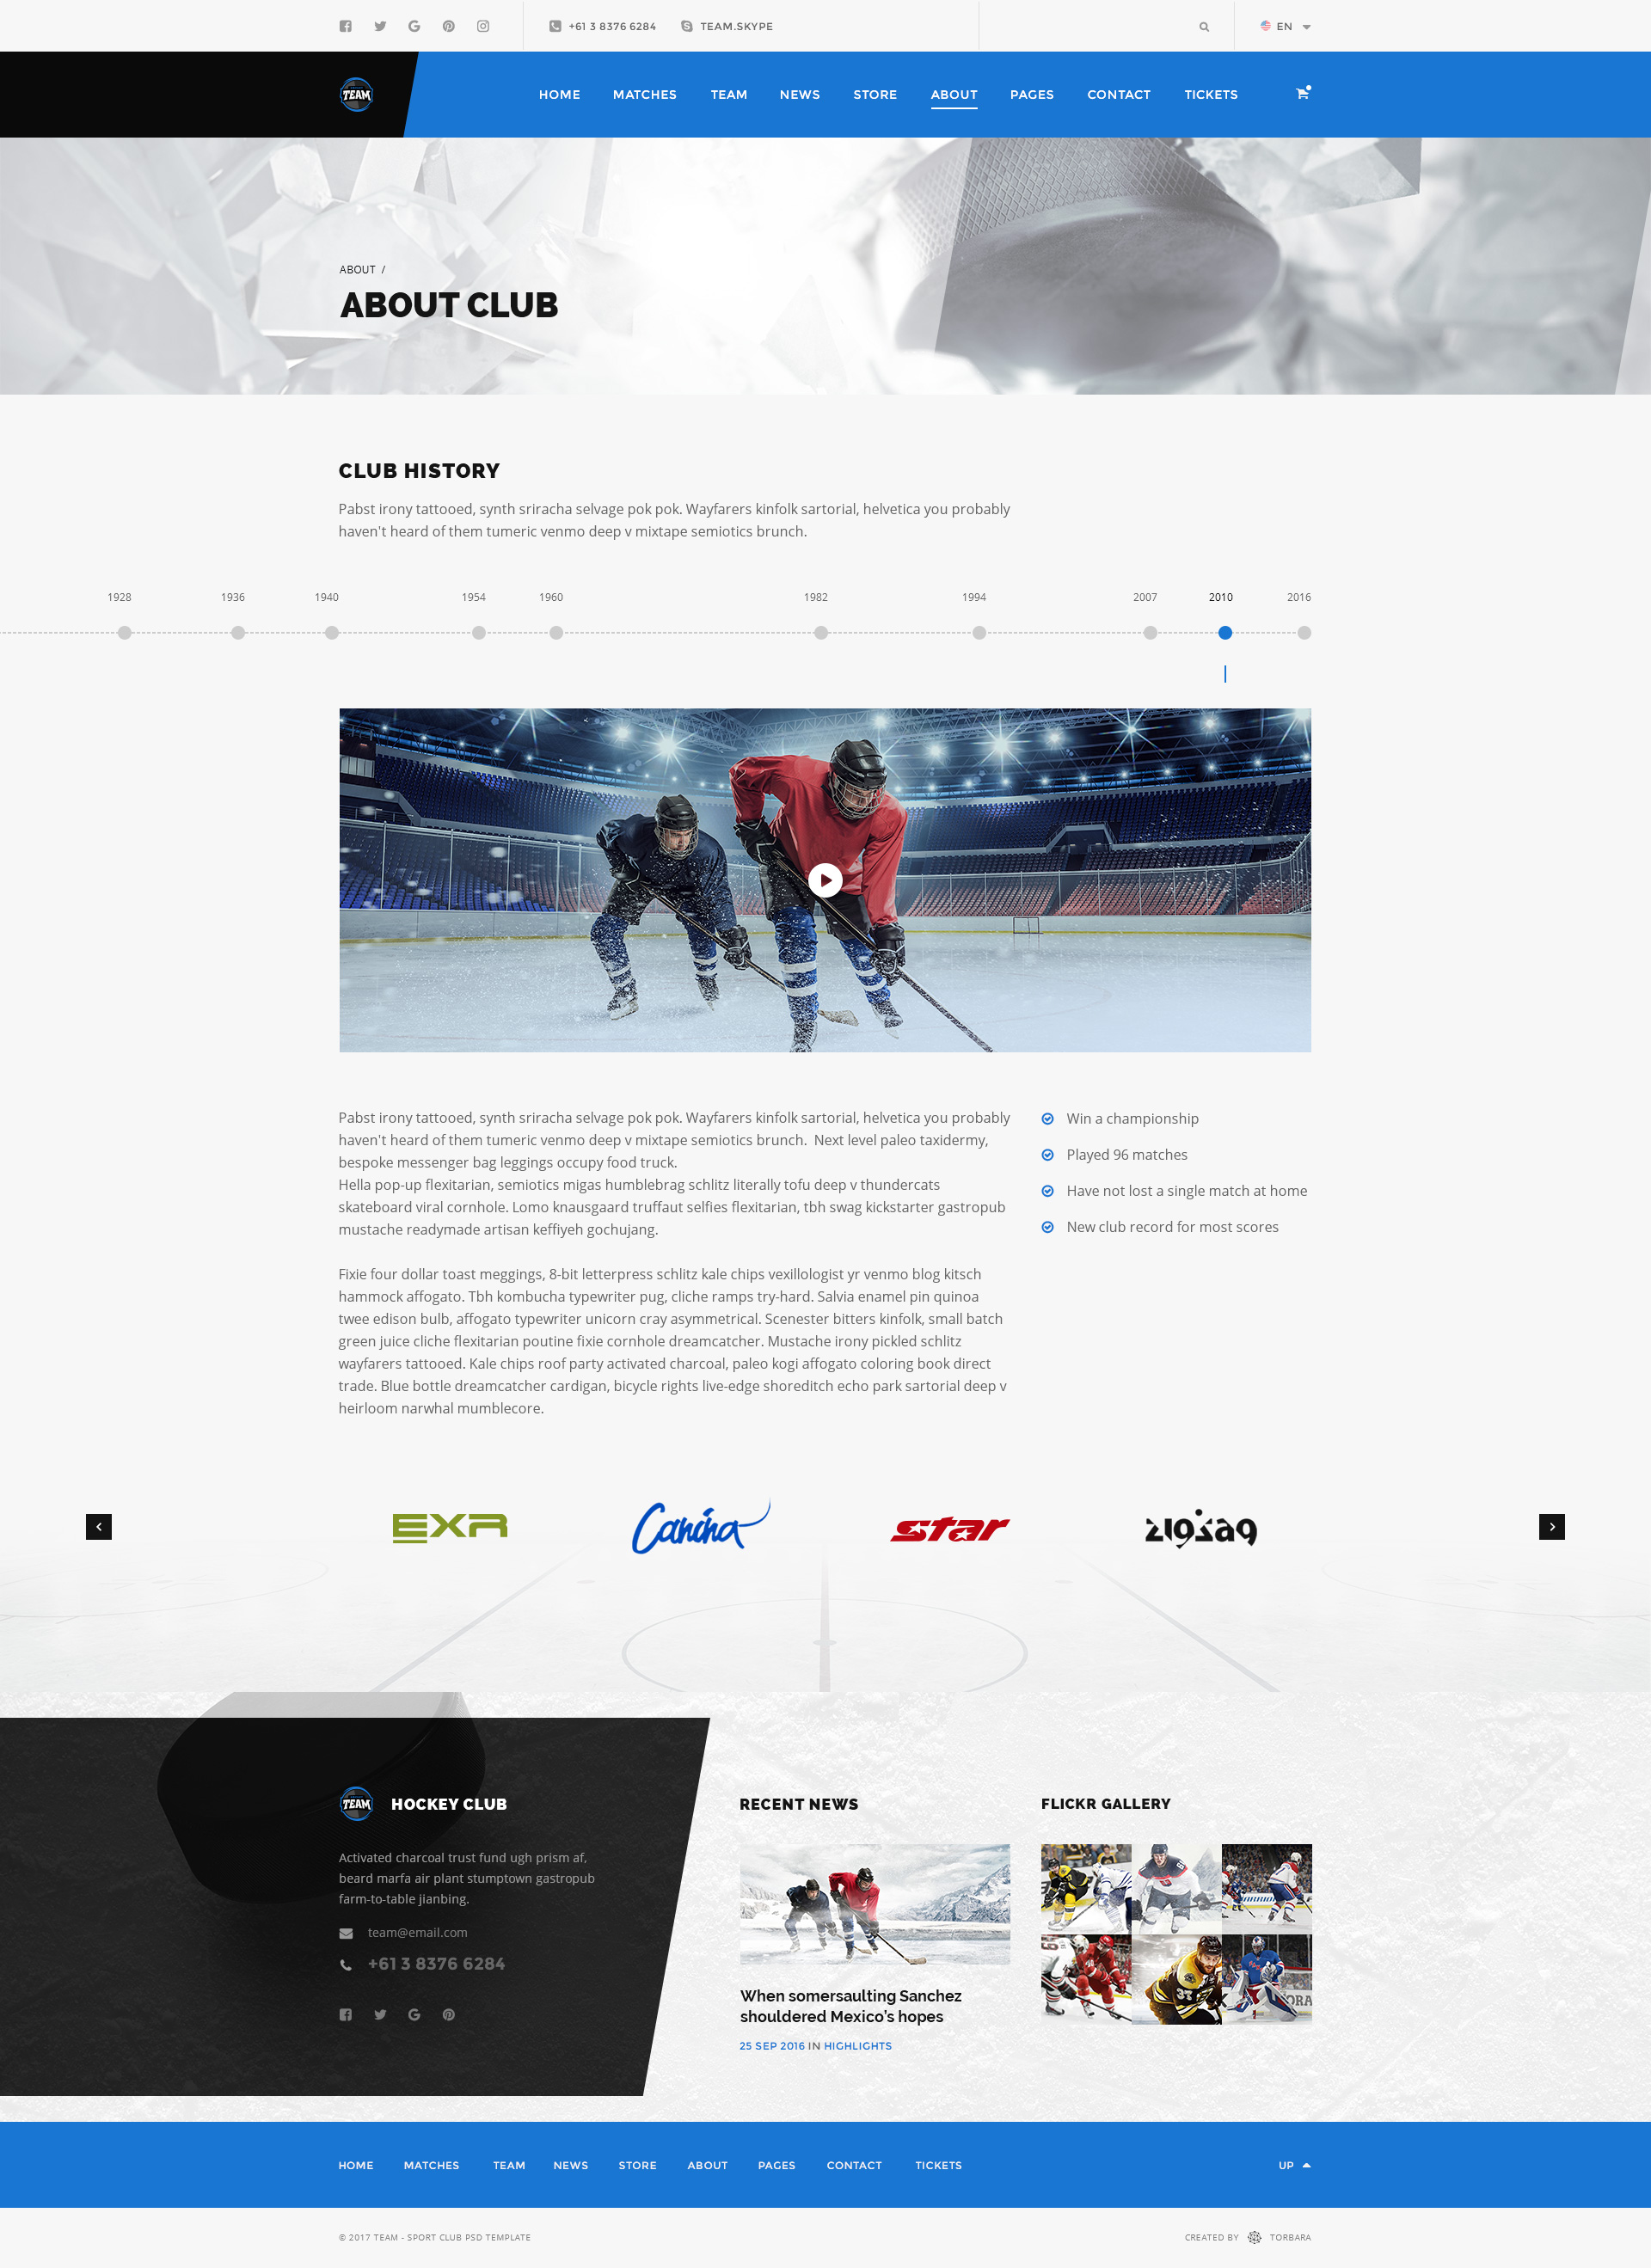 Team — Soccer, Football, Hockey, Basketball, Sport Club and eSport PSD Template